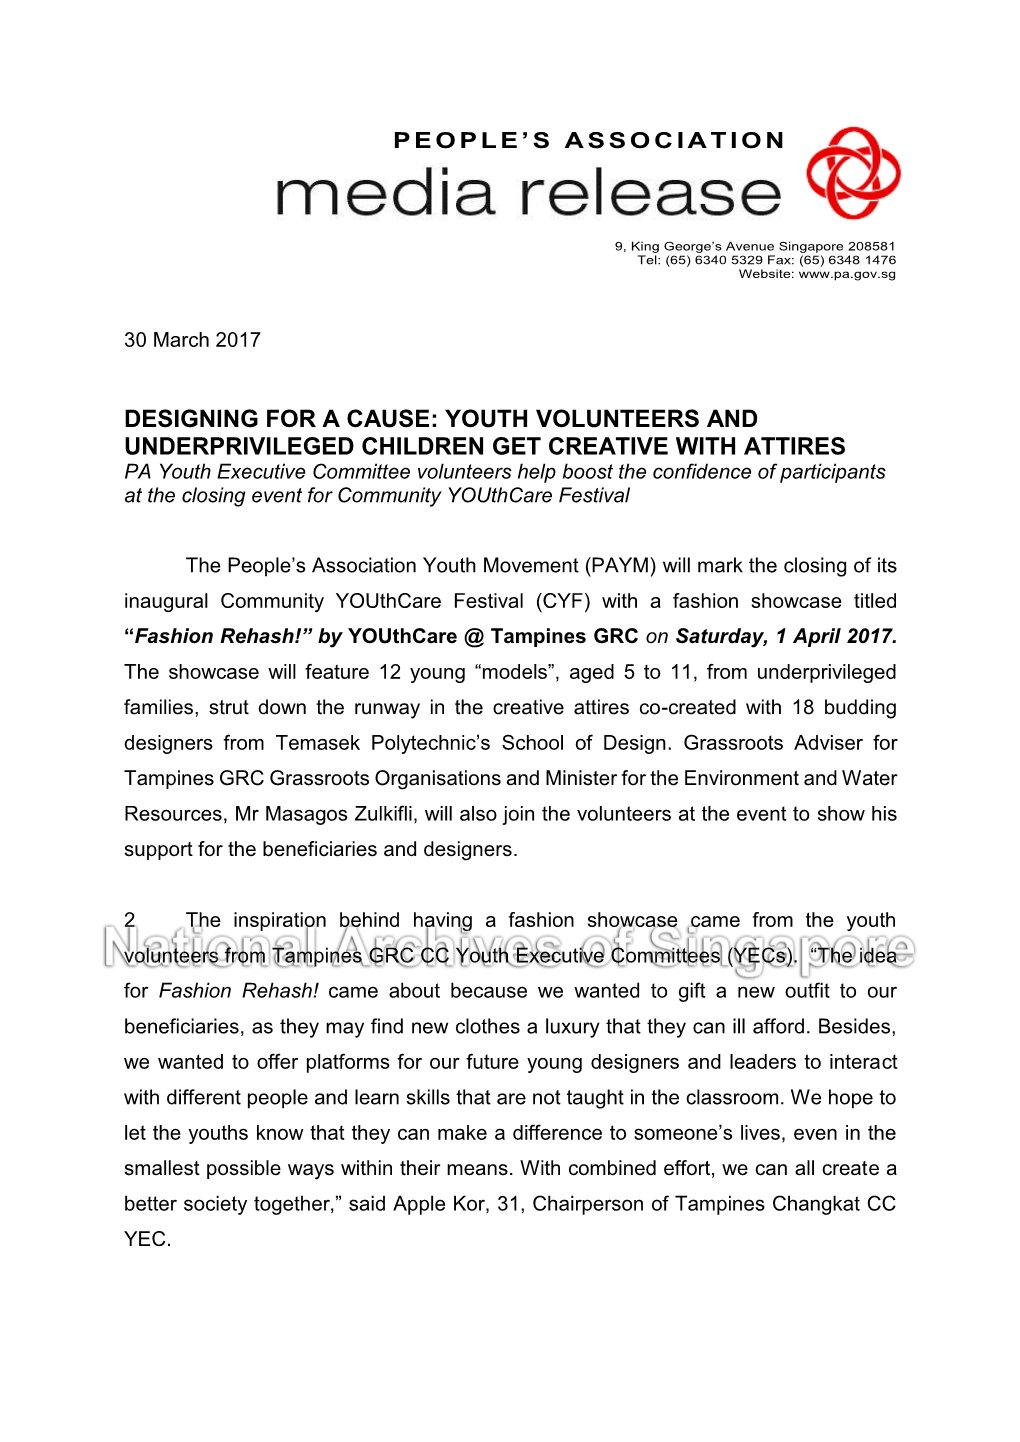 Youth Volunteers and Underprivileged Children